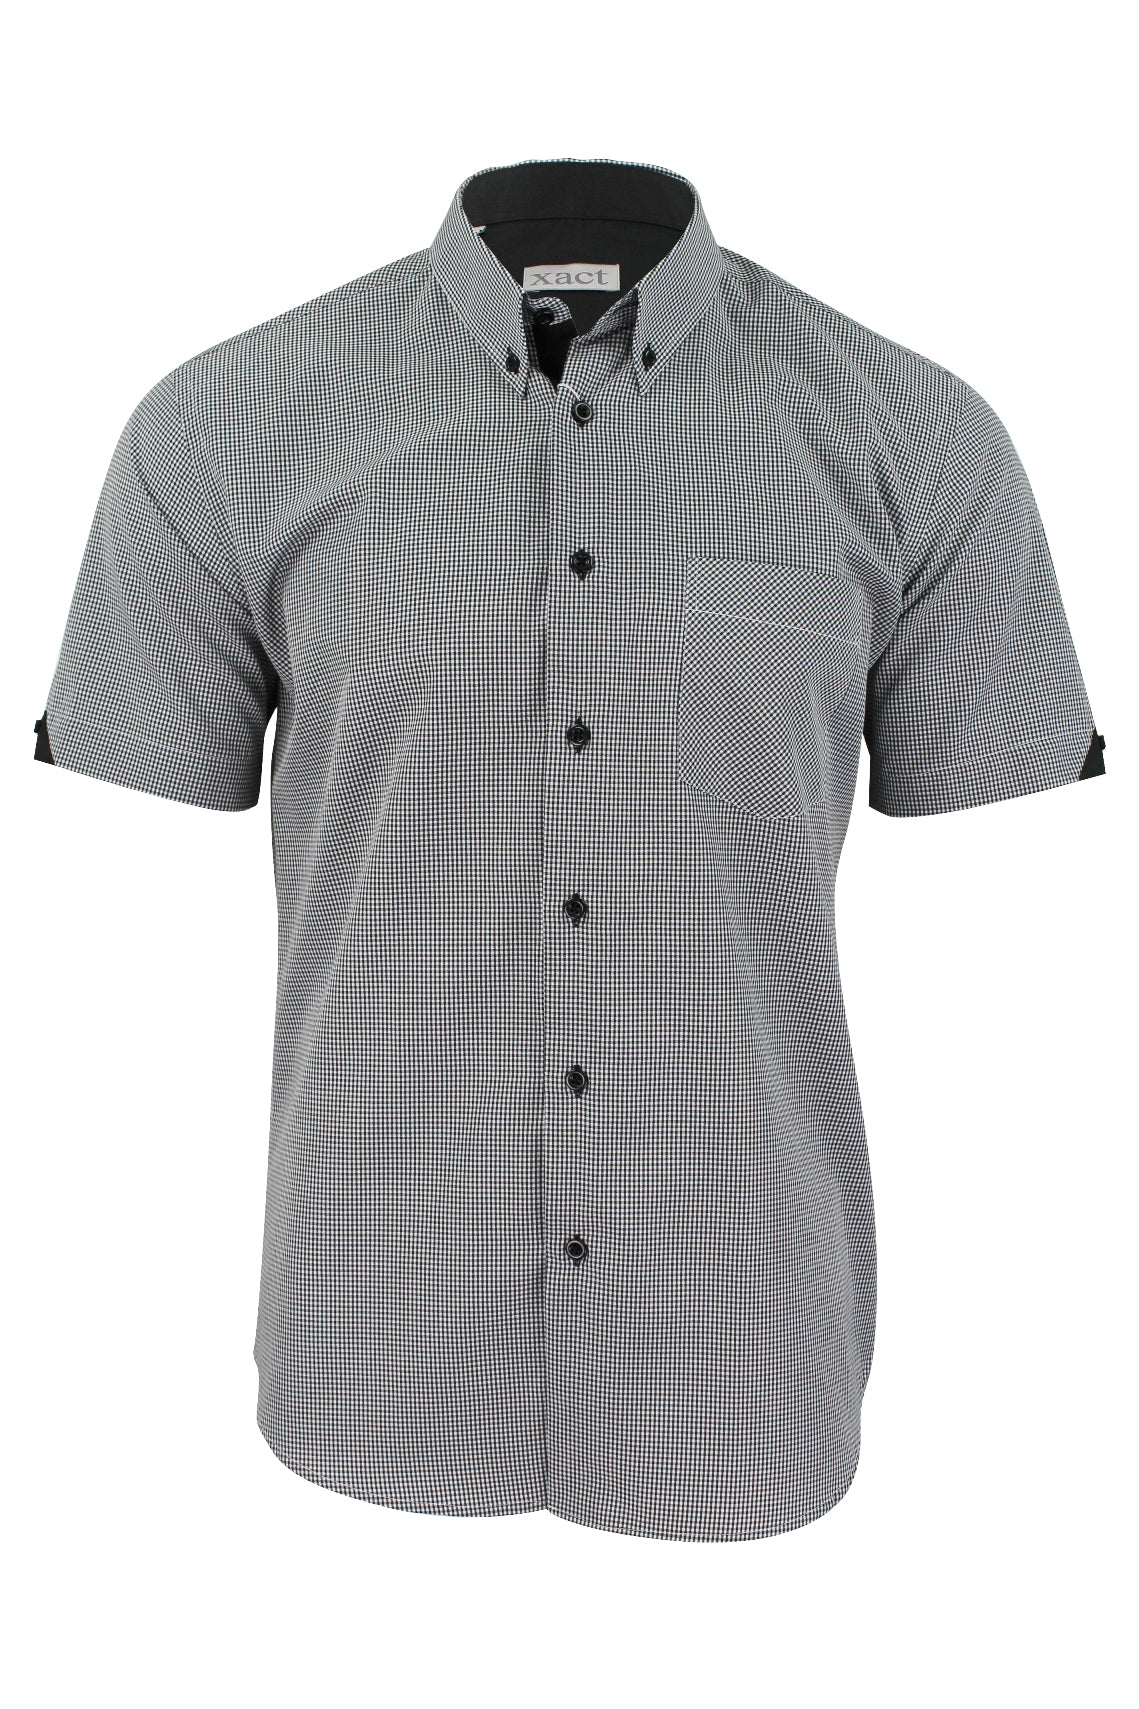 Mens Short Sleeved Shirt by Xact Clothing Micro Gingham Check-2